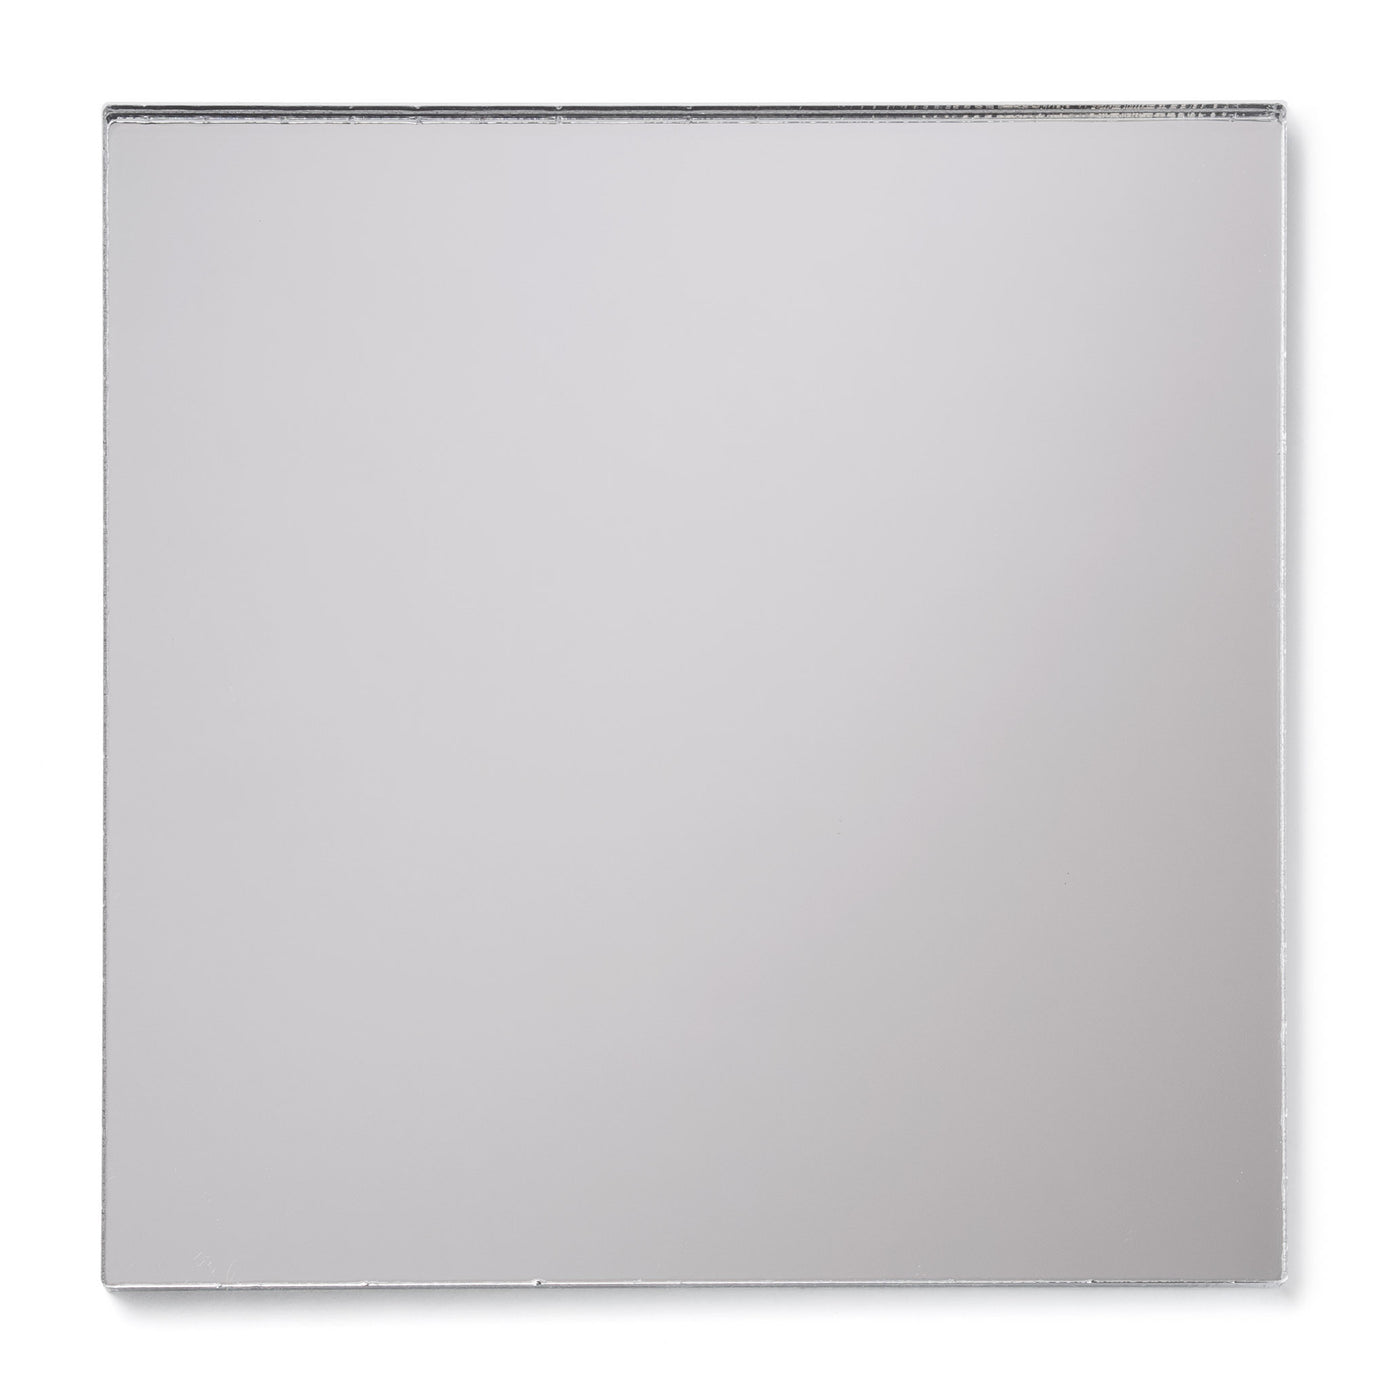 12 x 24 ⅛” Acrylic Plastic Mirror Sheet with Finished Polished Edges (1)